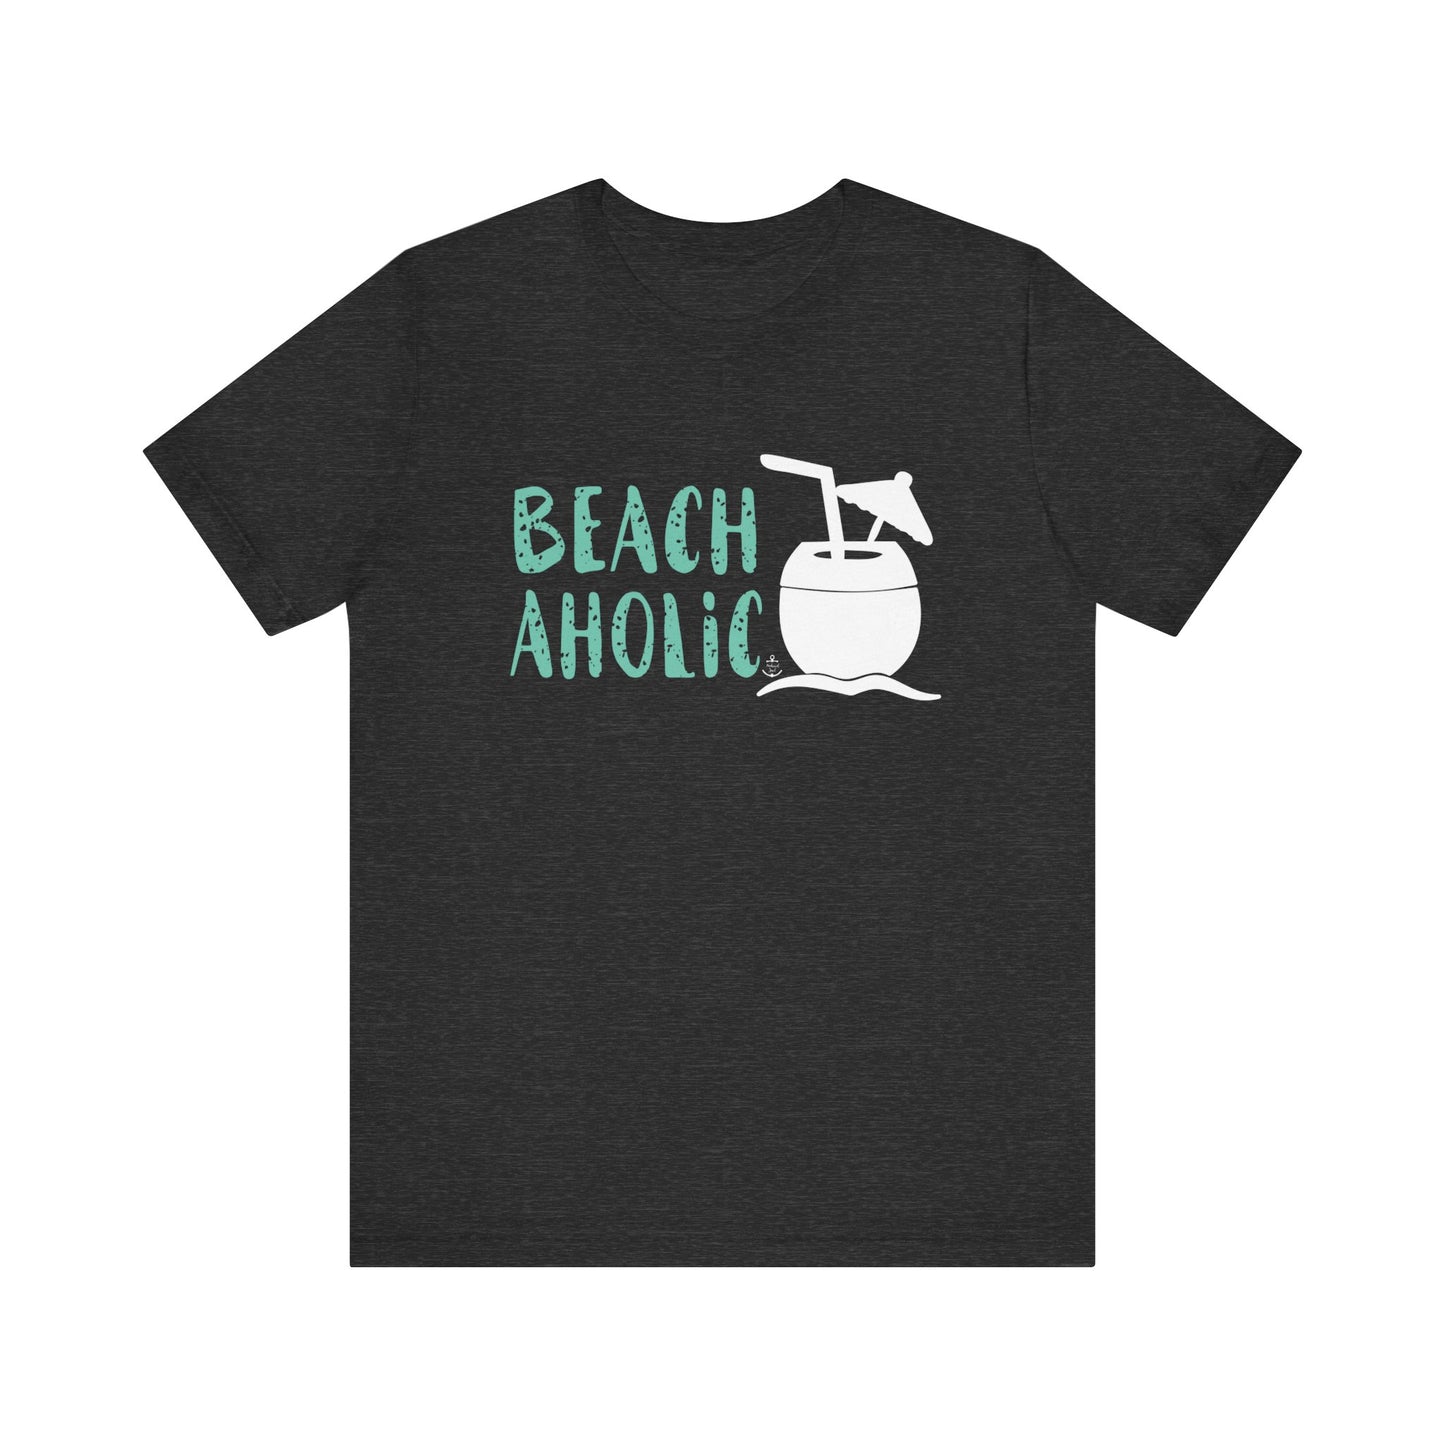 Beachaholic t-shirt, beach drink, beachaholic tee, beach shirts for women, summer shirt, cruise trip shirt, vacation shirt, beach trip shirt